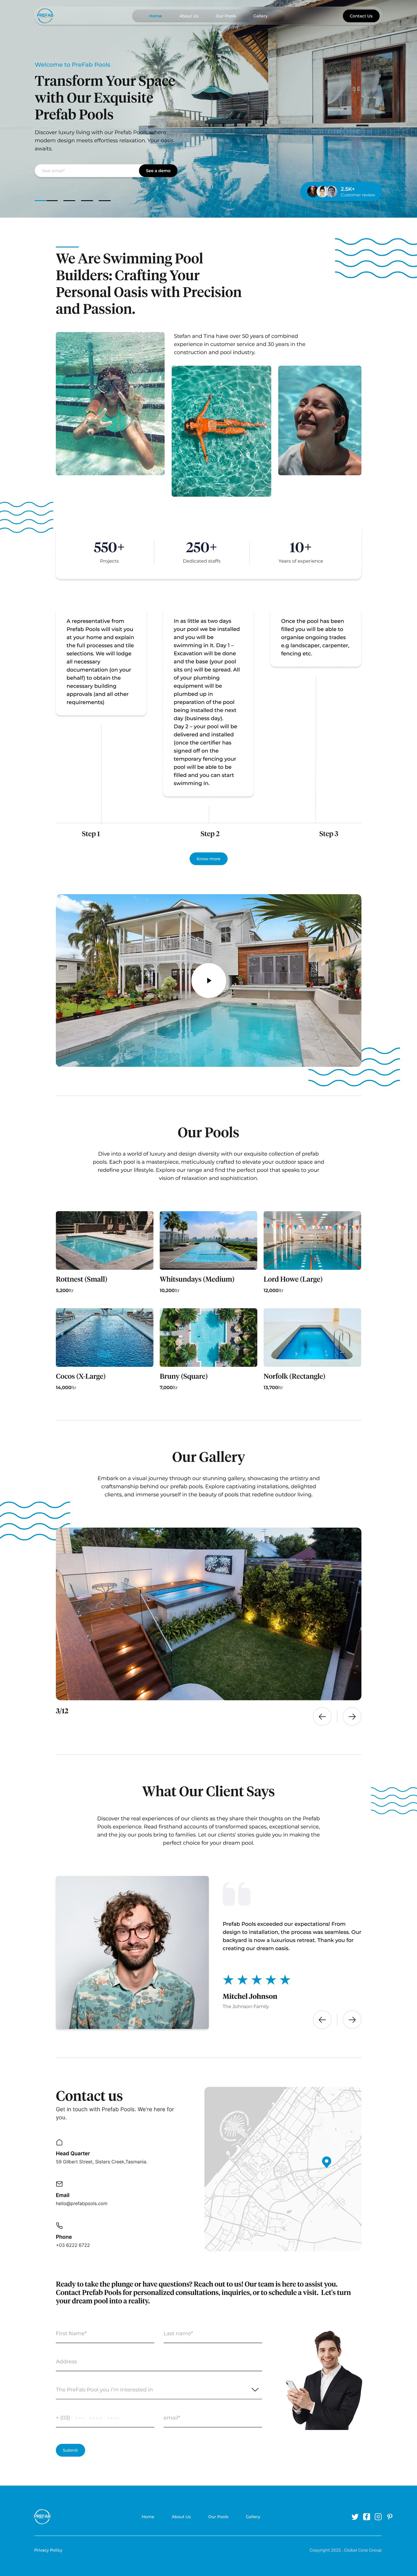 Pool model photoshoot Social media post Viral Marketing landing page UI/UX Web Design  hotel resturant